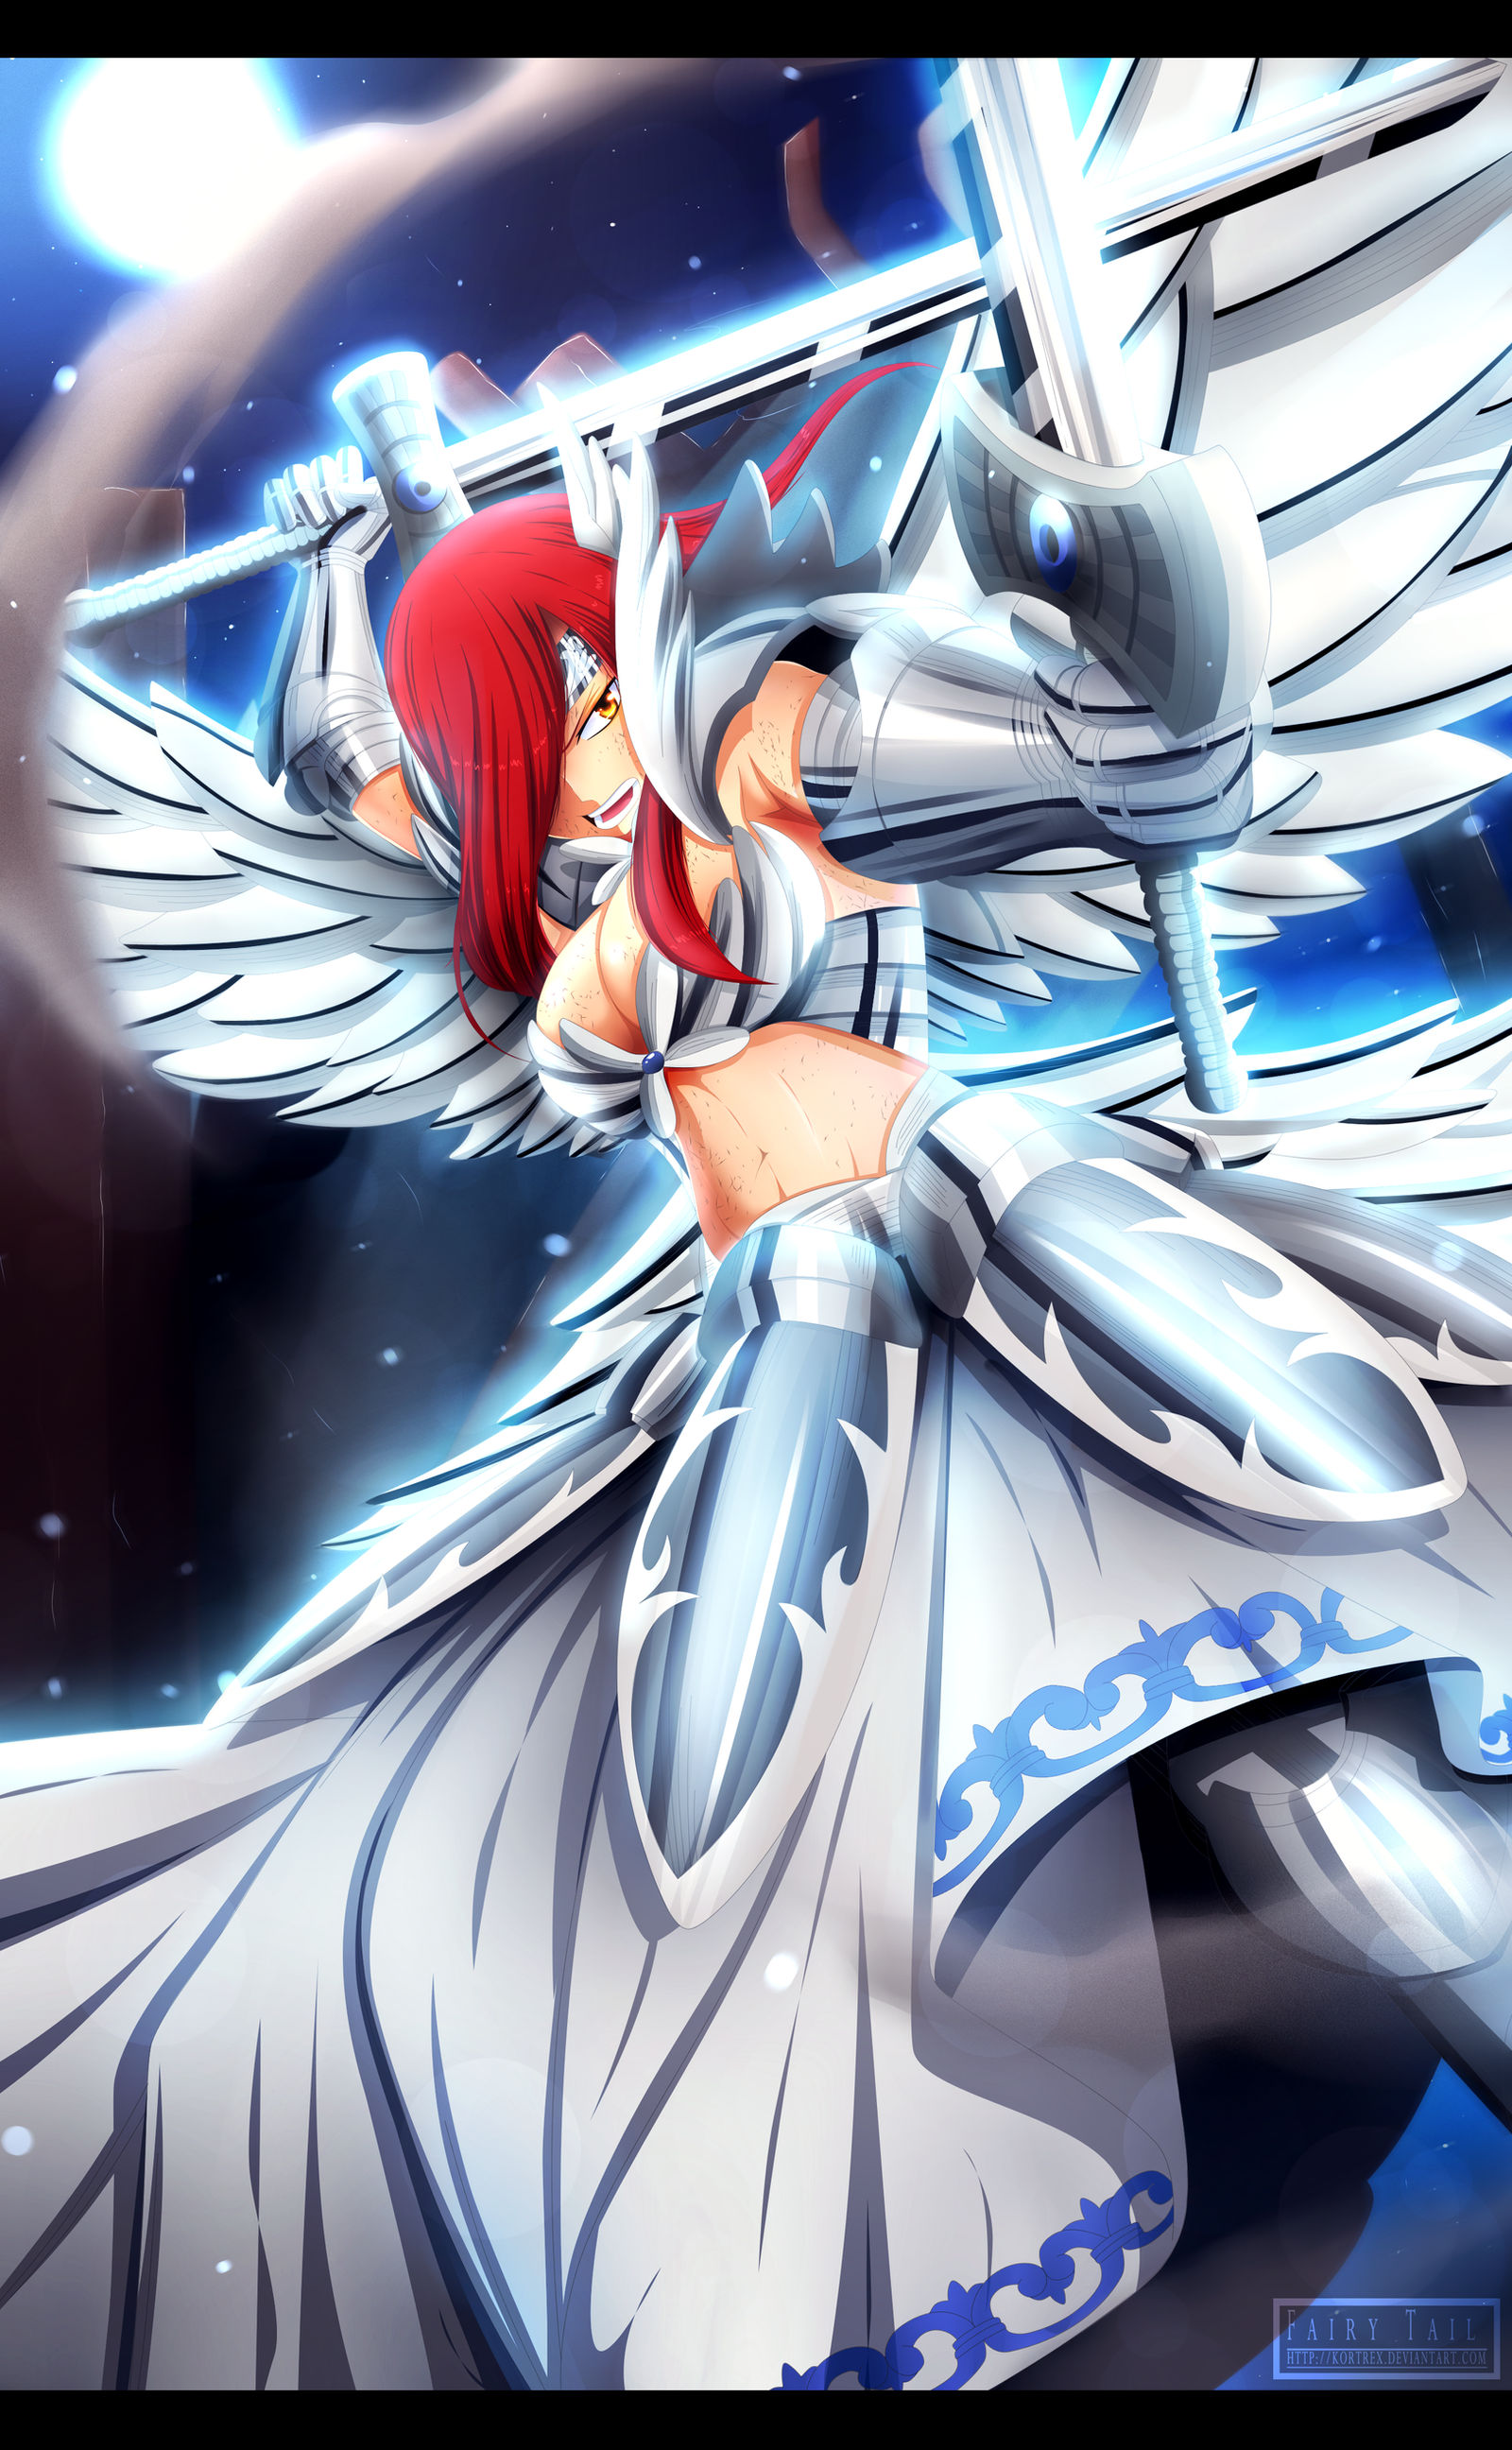 Sword Art Online/ Fairy Tail Artwork. by iDemon345 on DeviantArt